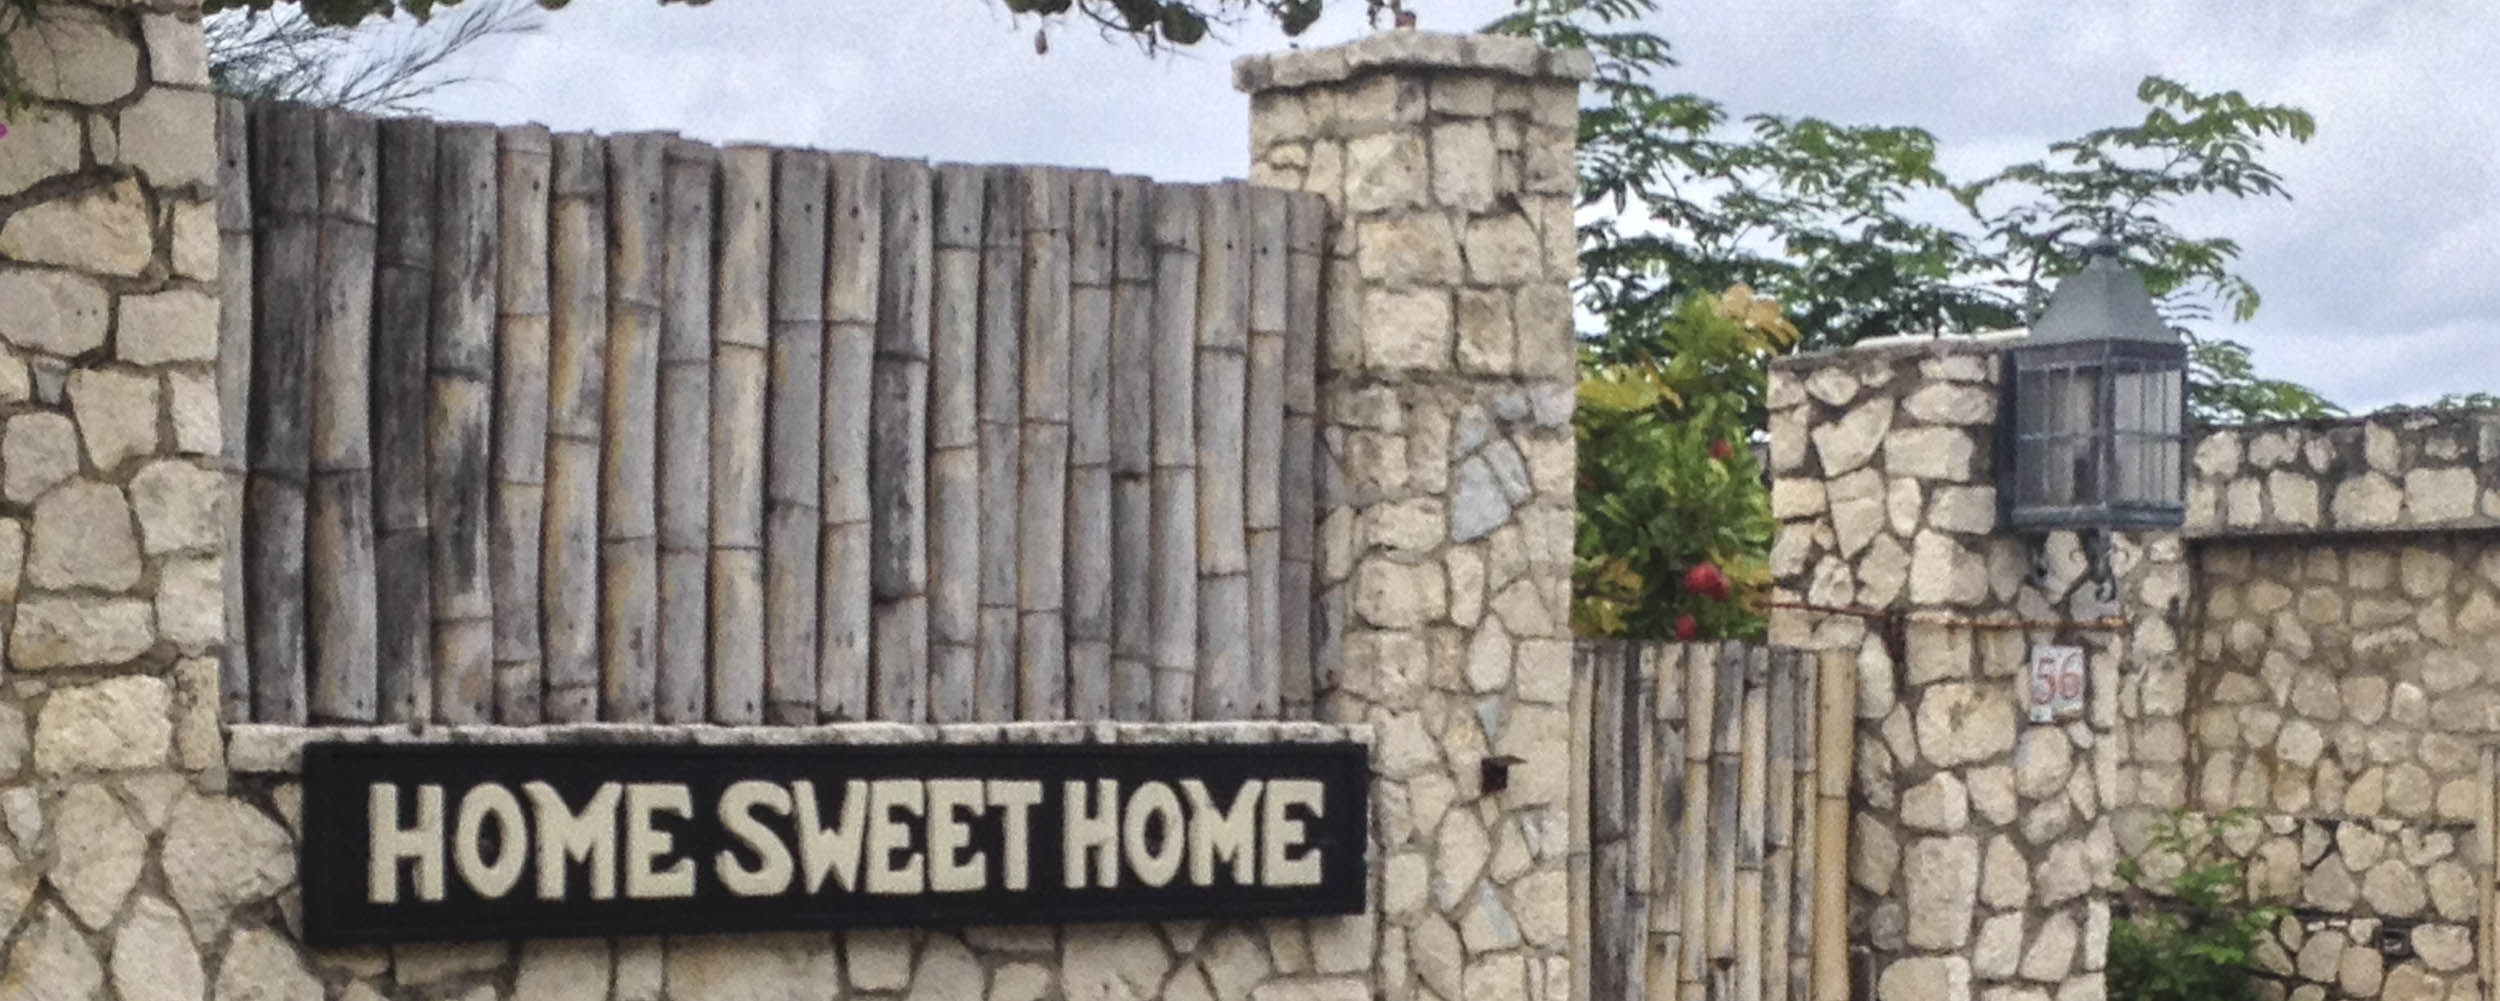 Home Sweet Home - Negril Jamaica